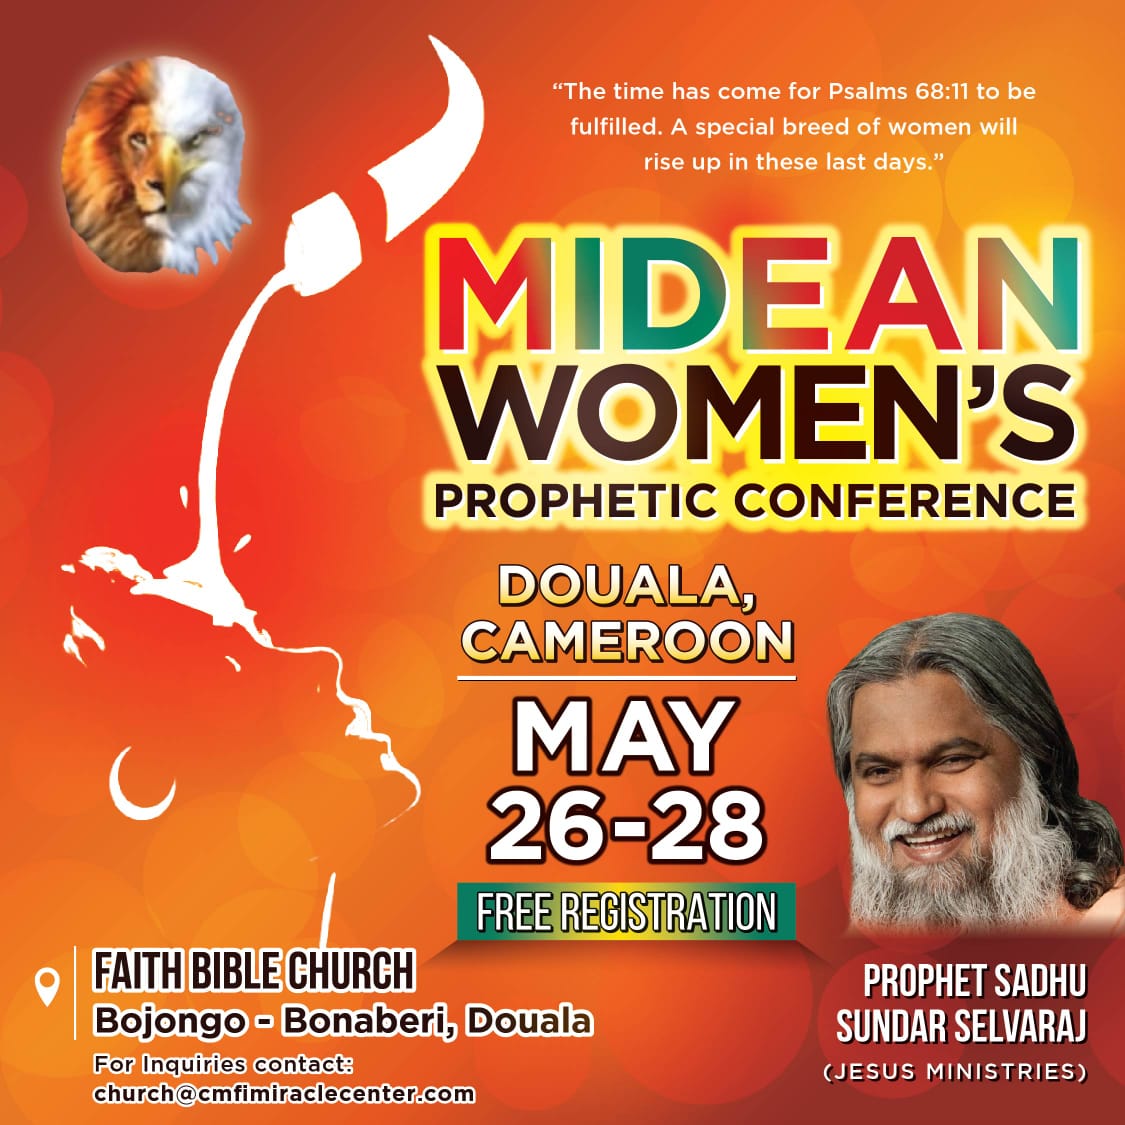 Midean Women's prophetic conference